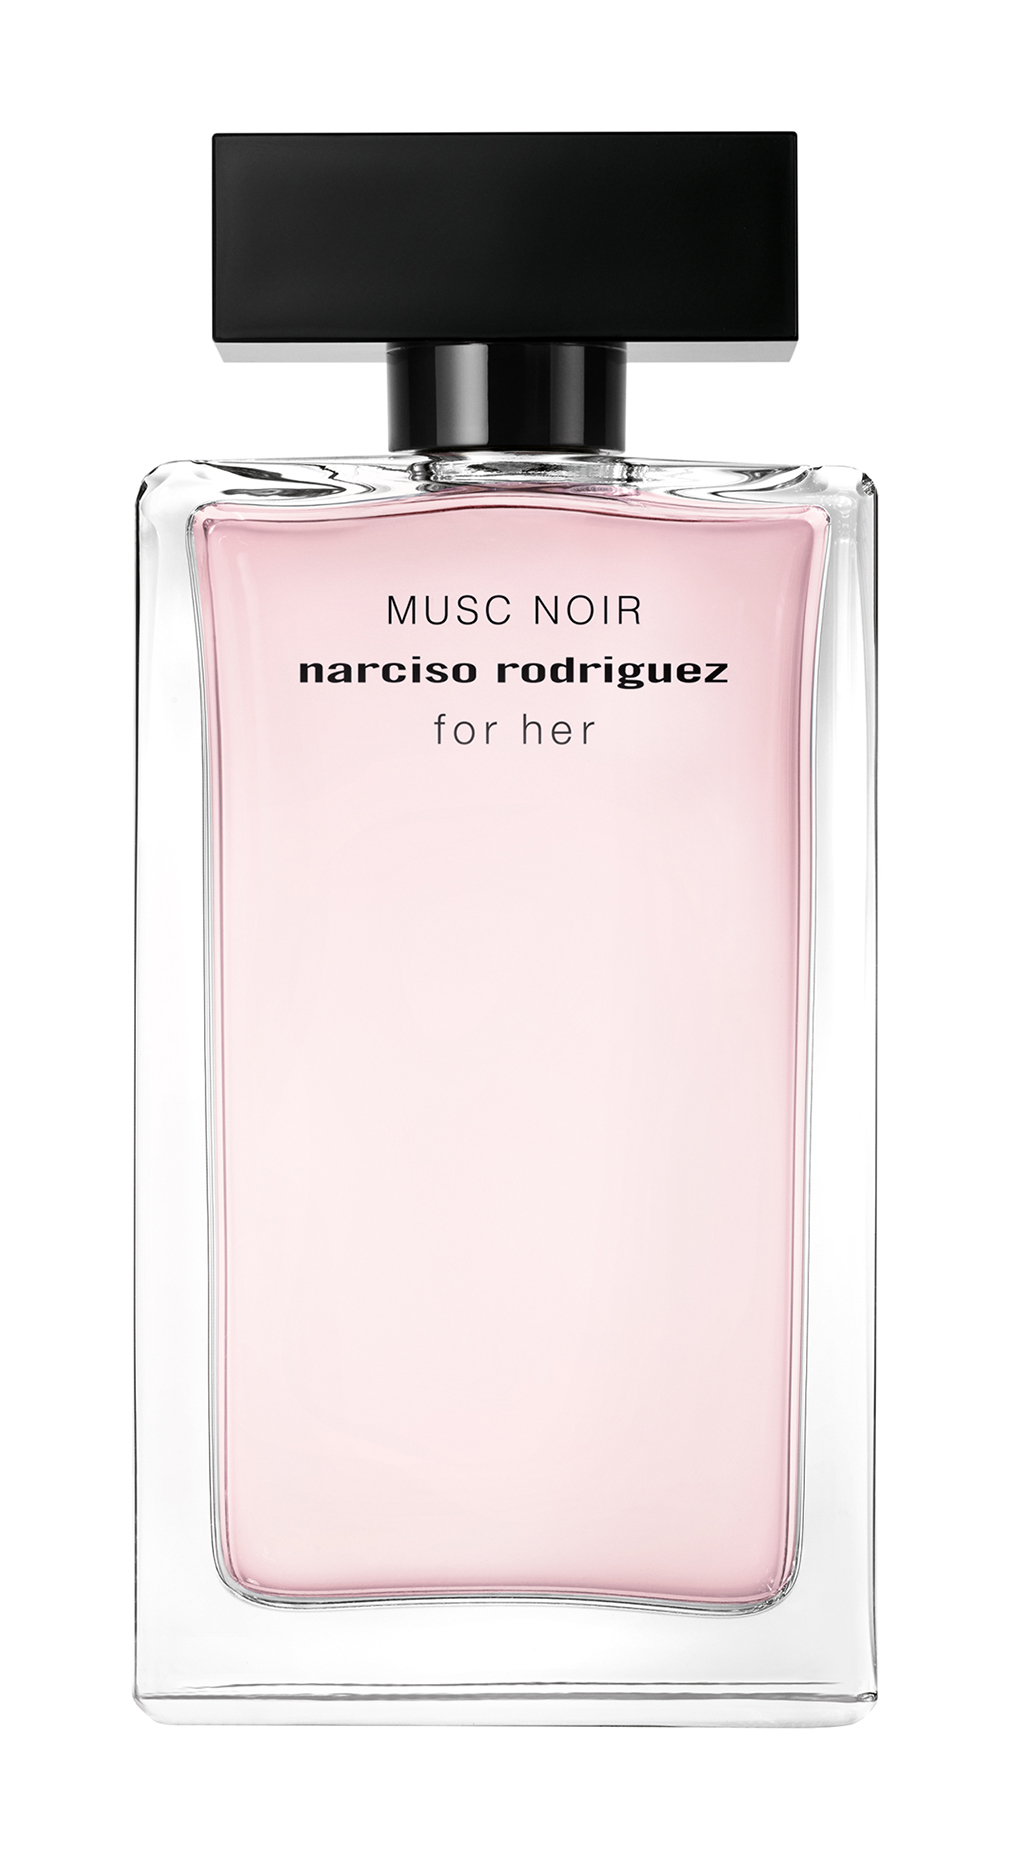 Парфюм narciso rodriguez. Narciso Rodriguez for her. Narciso Rodriguez Musc for her. Narciso Rodriguez for her Eau de Parfum парфюмерная вода 100 мл. Narciso Rodriguez Narciso.